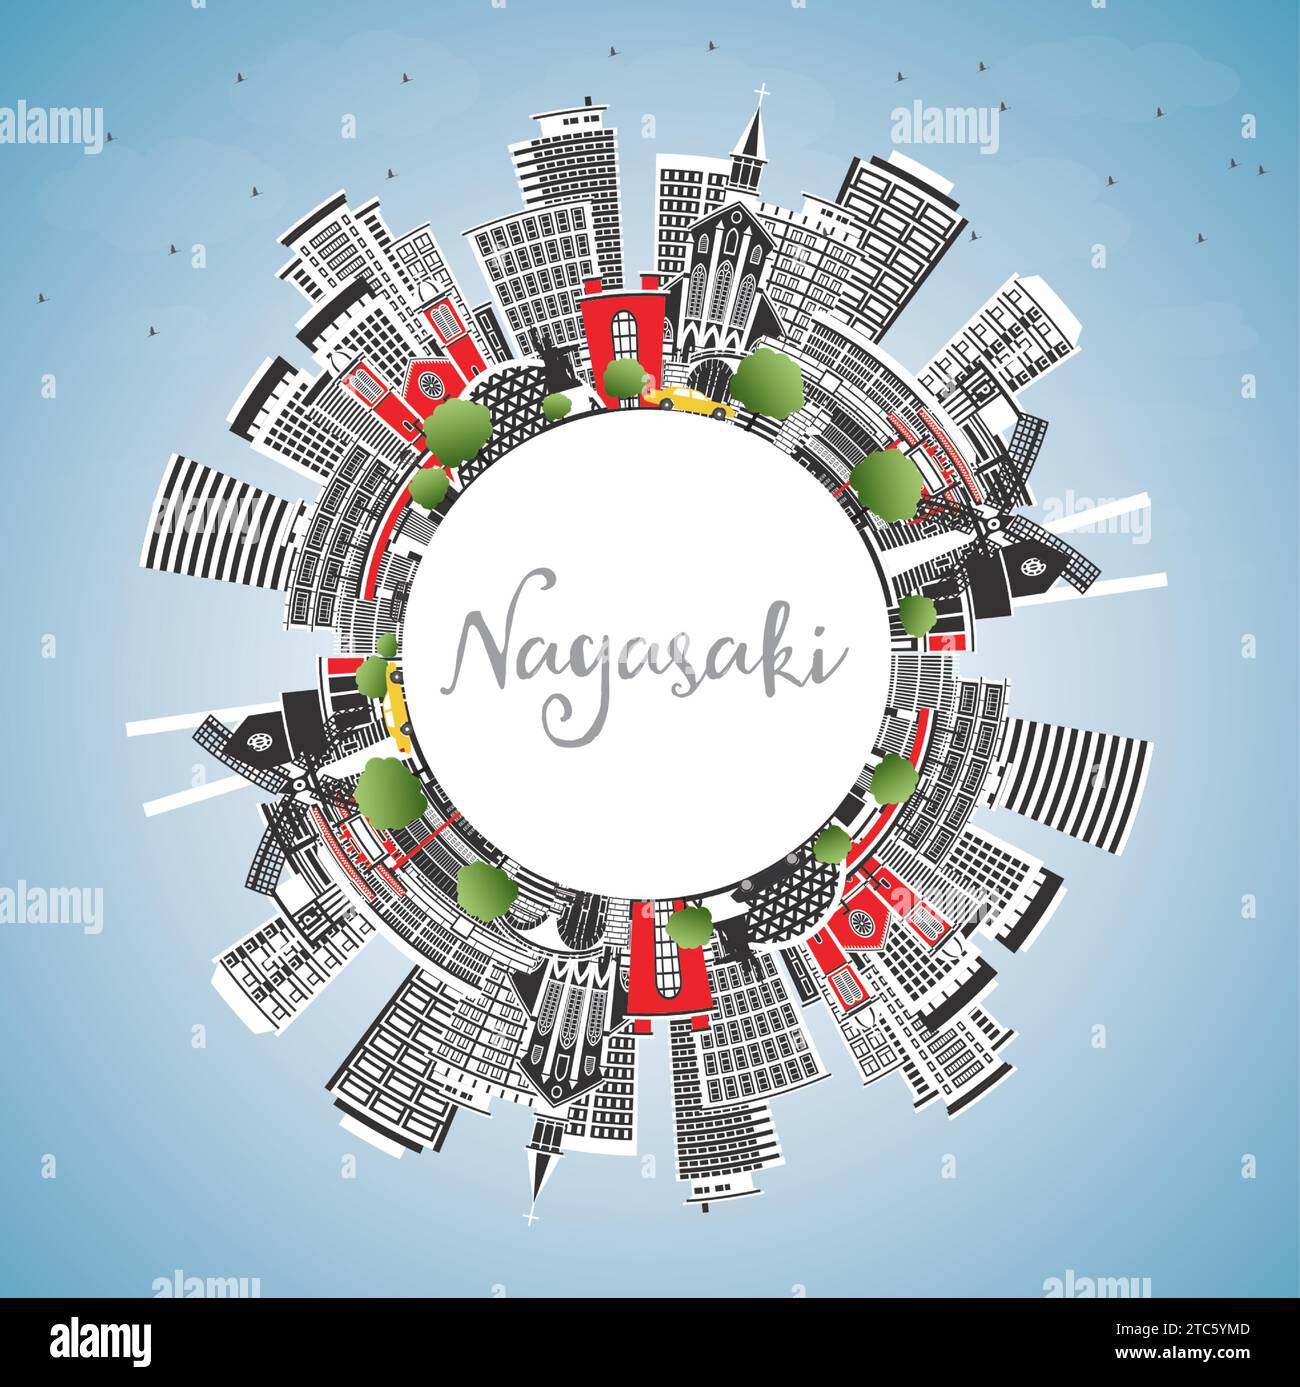 Nagasaki Japan City Skyline with Color Buildings, Blue Sky and Copy Space. Vector Illustration. Nagasaki Cityscape with Landmarks. Stock Vector